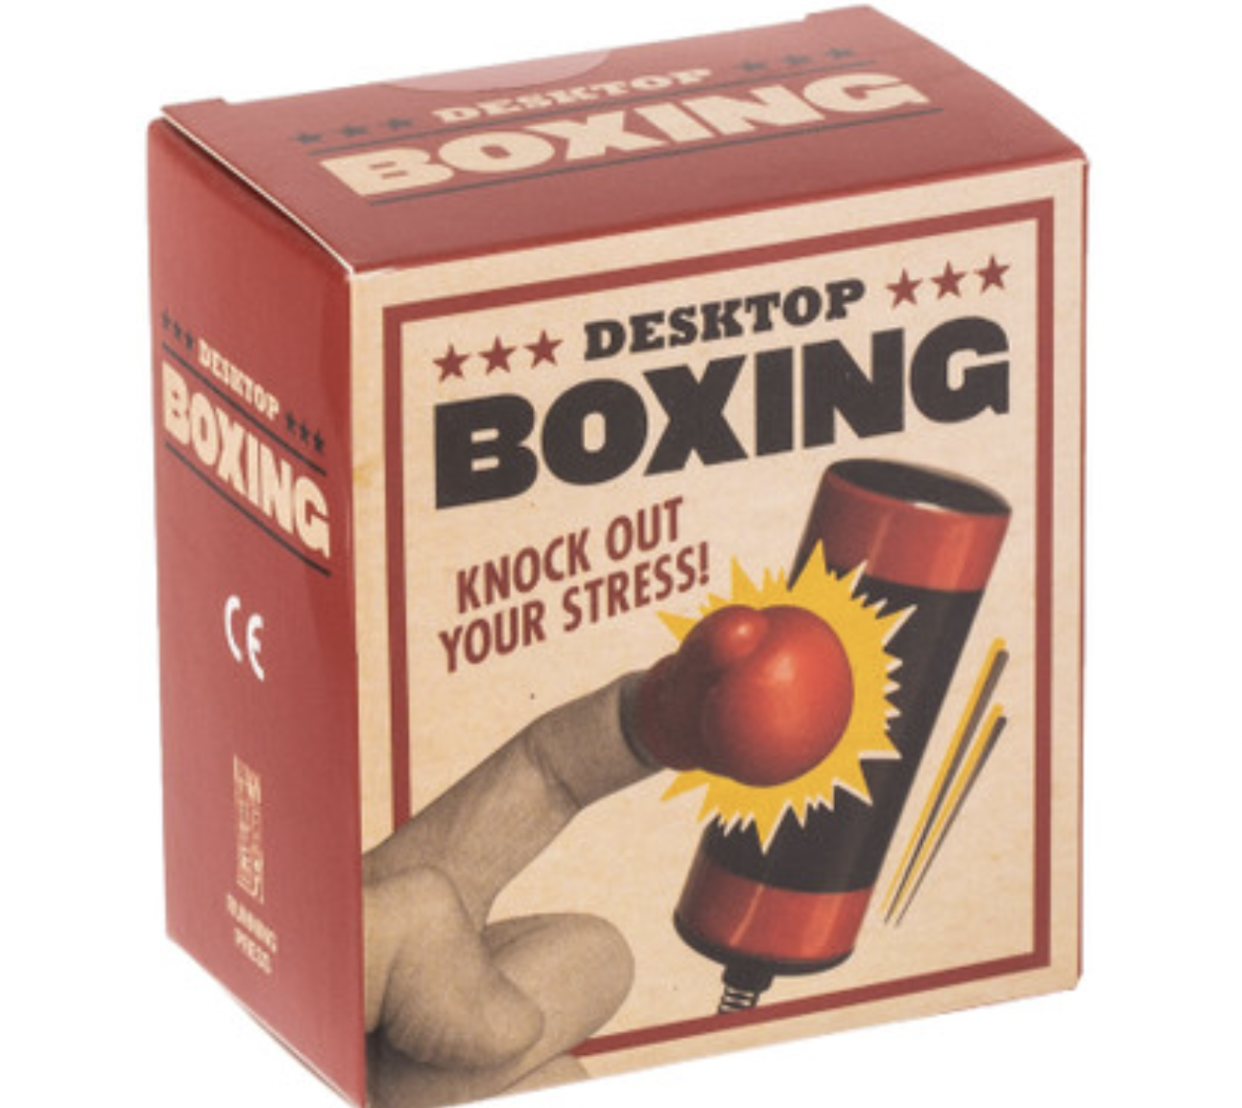 Desktop boxing kit